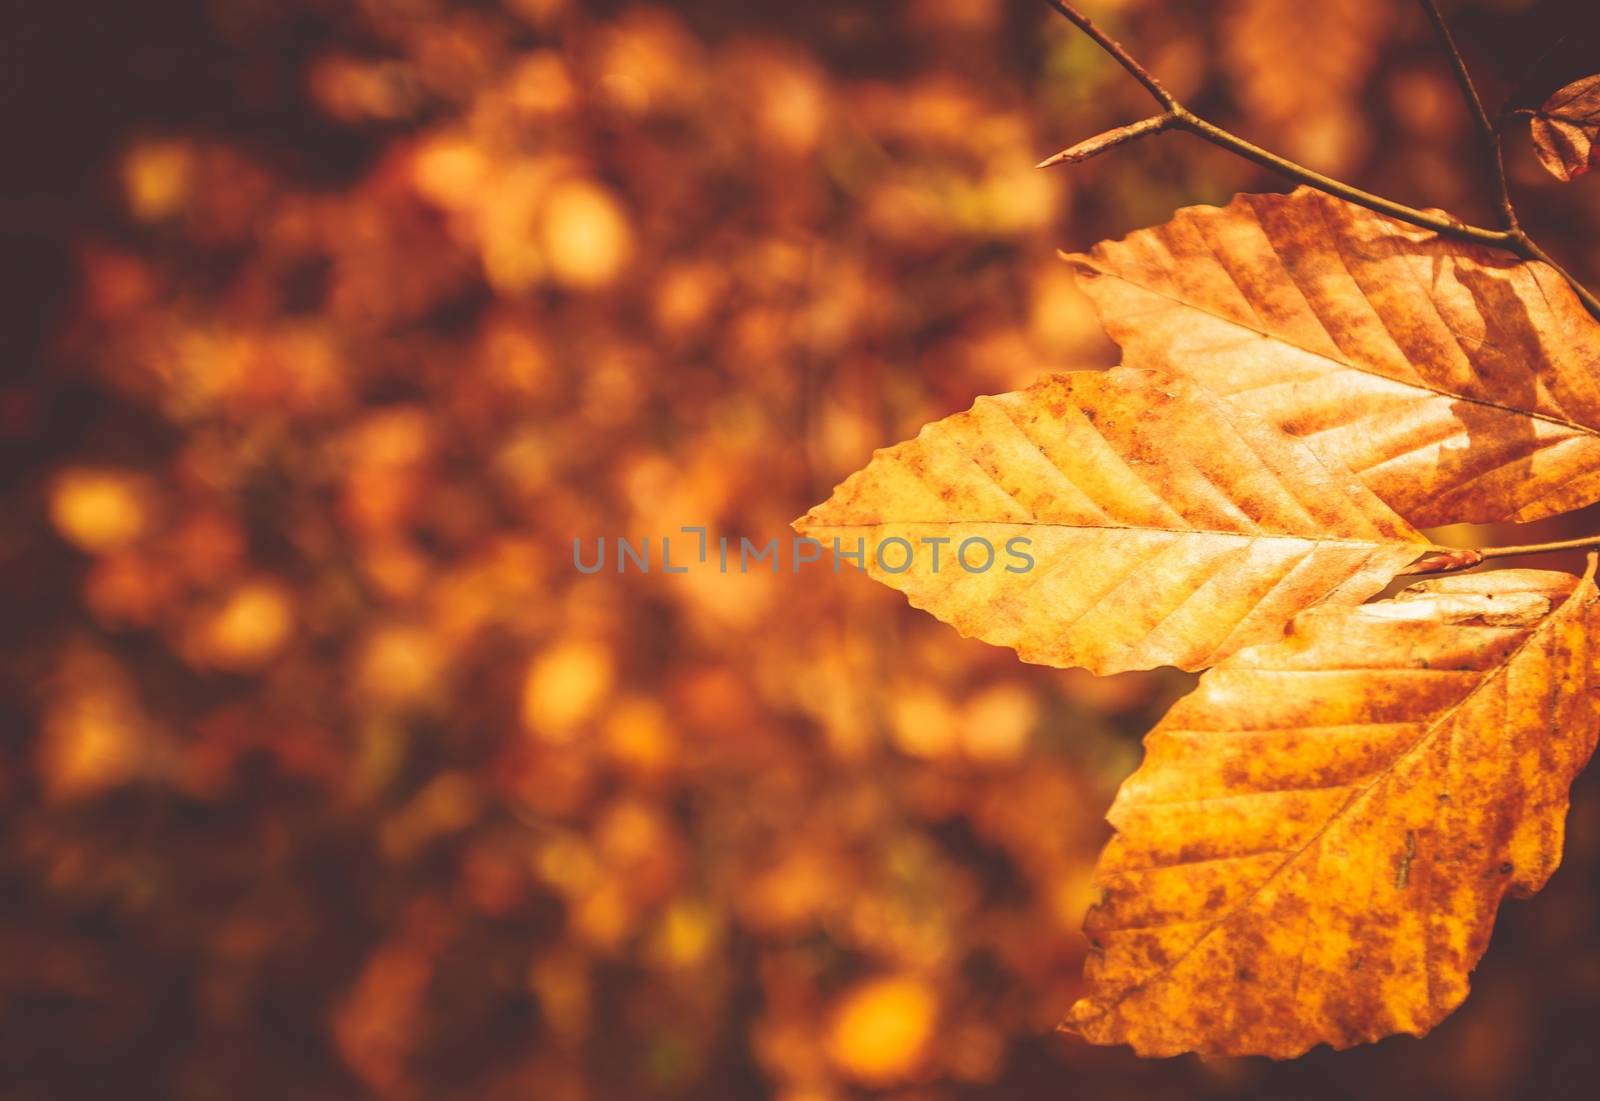 Fall Foliage Photo Background. Golden Leaves Autumn Backdrop.